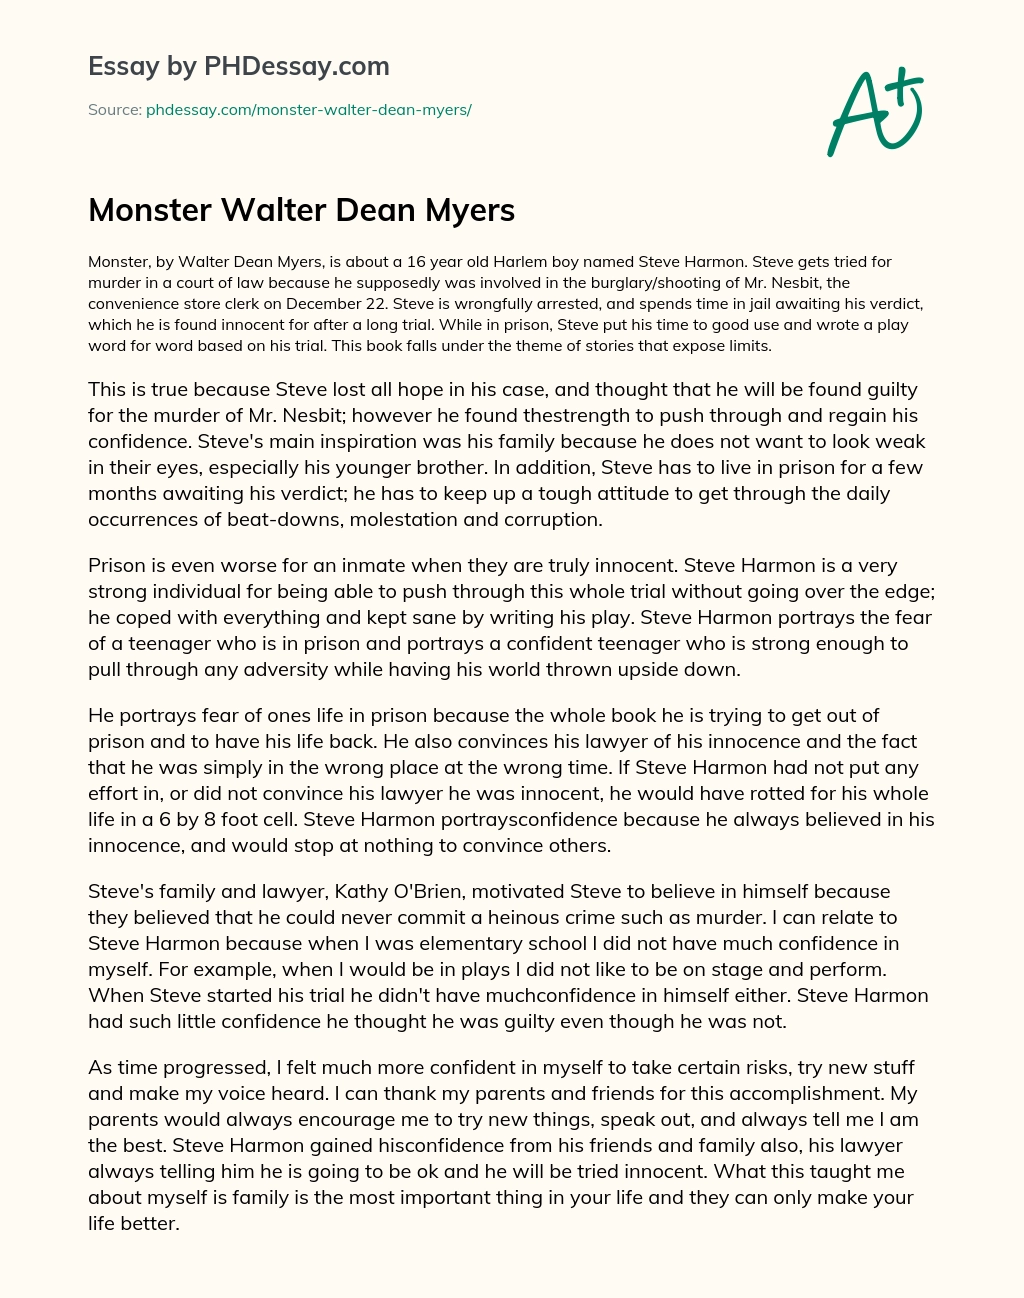 Monster Walter Dean Myers essay